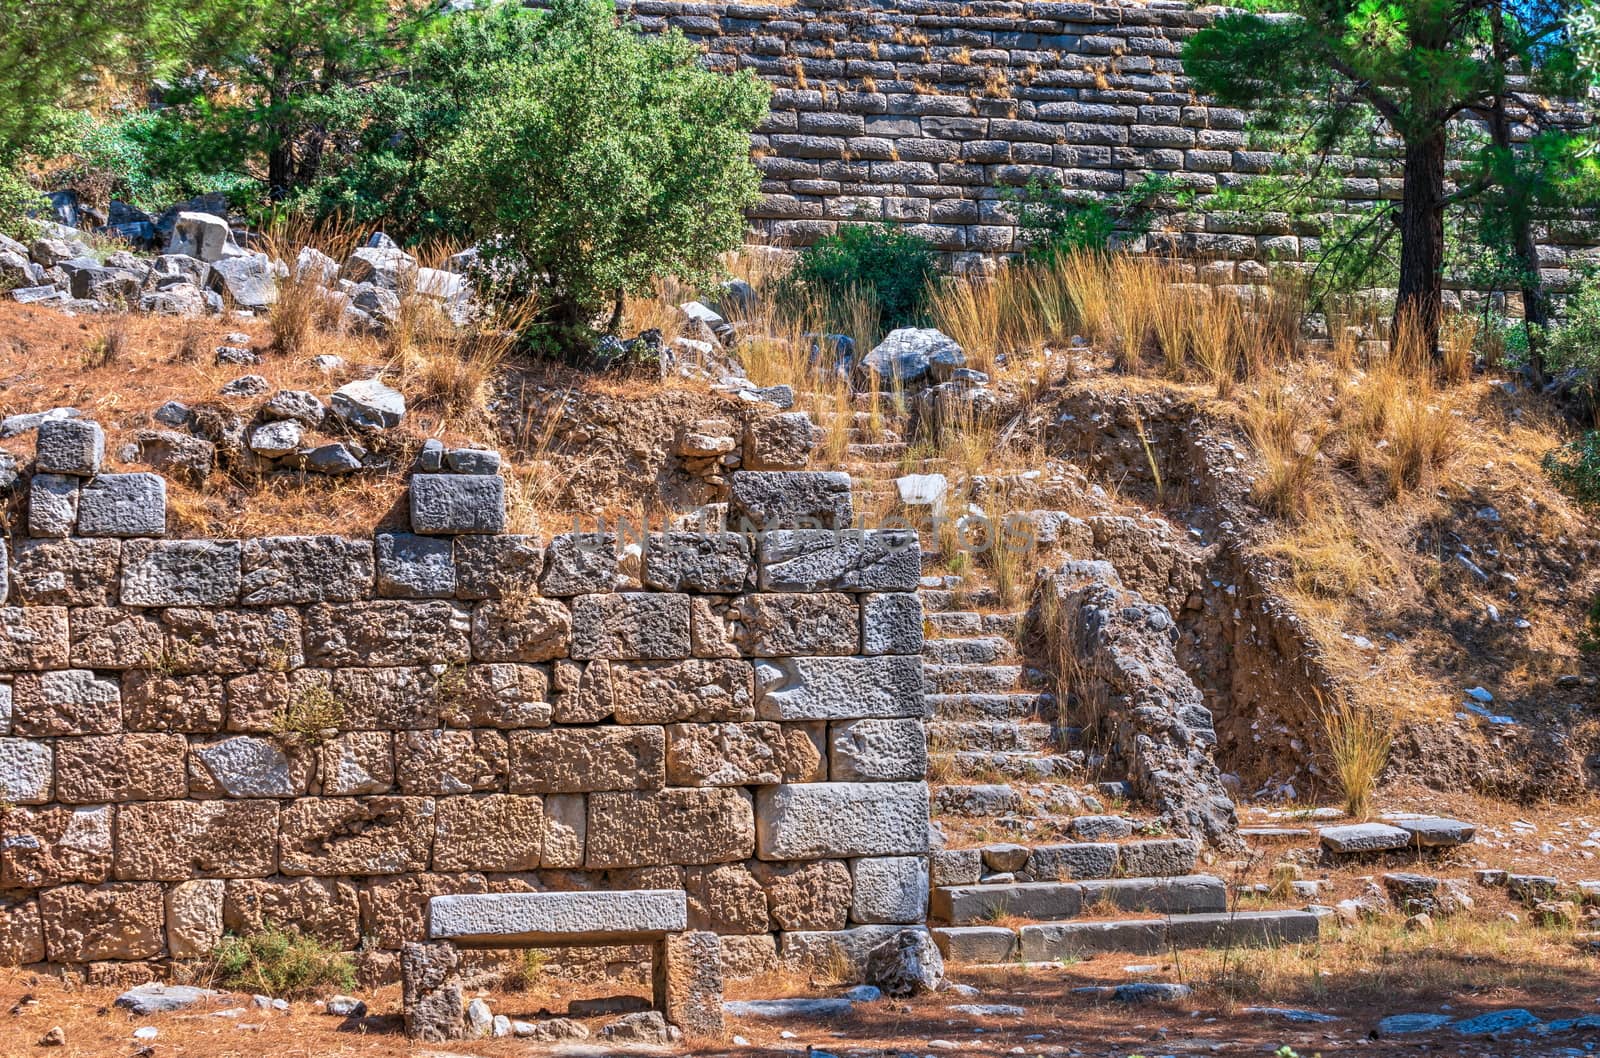 Ancient Greek city Priene on the western coast of Turkey by Multipedia